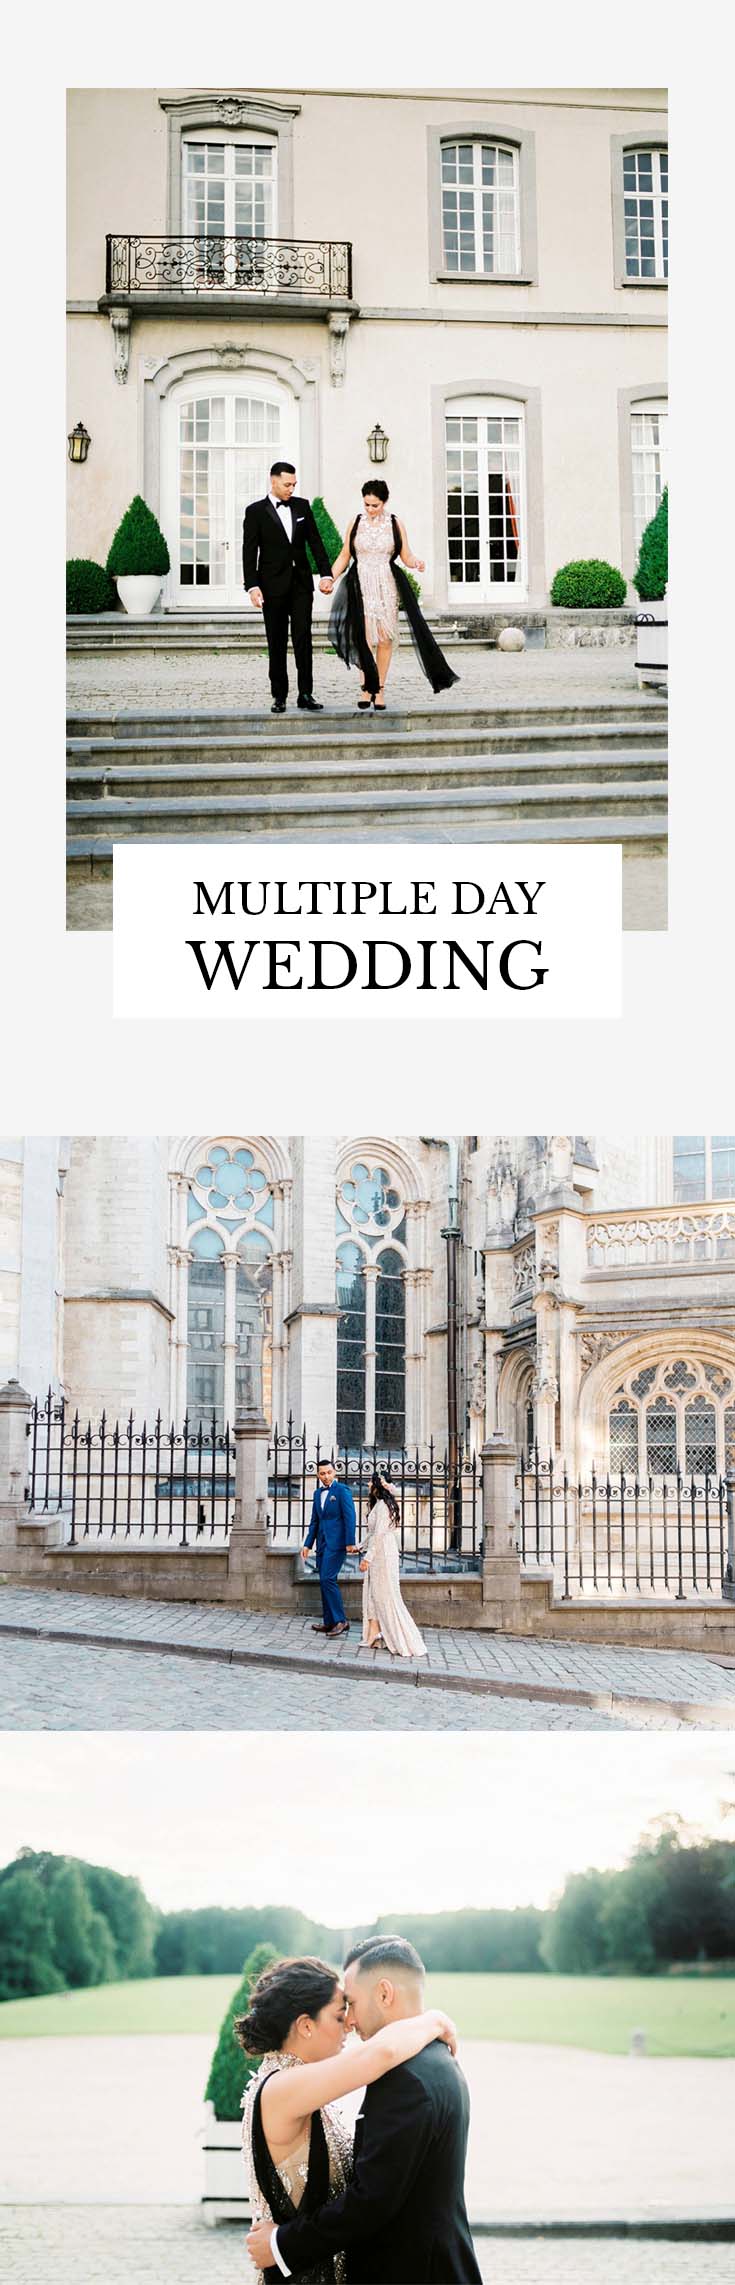 MULTIPLE DAY WEDDING